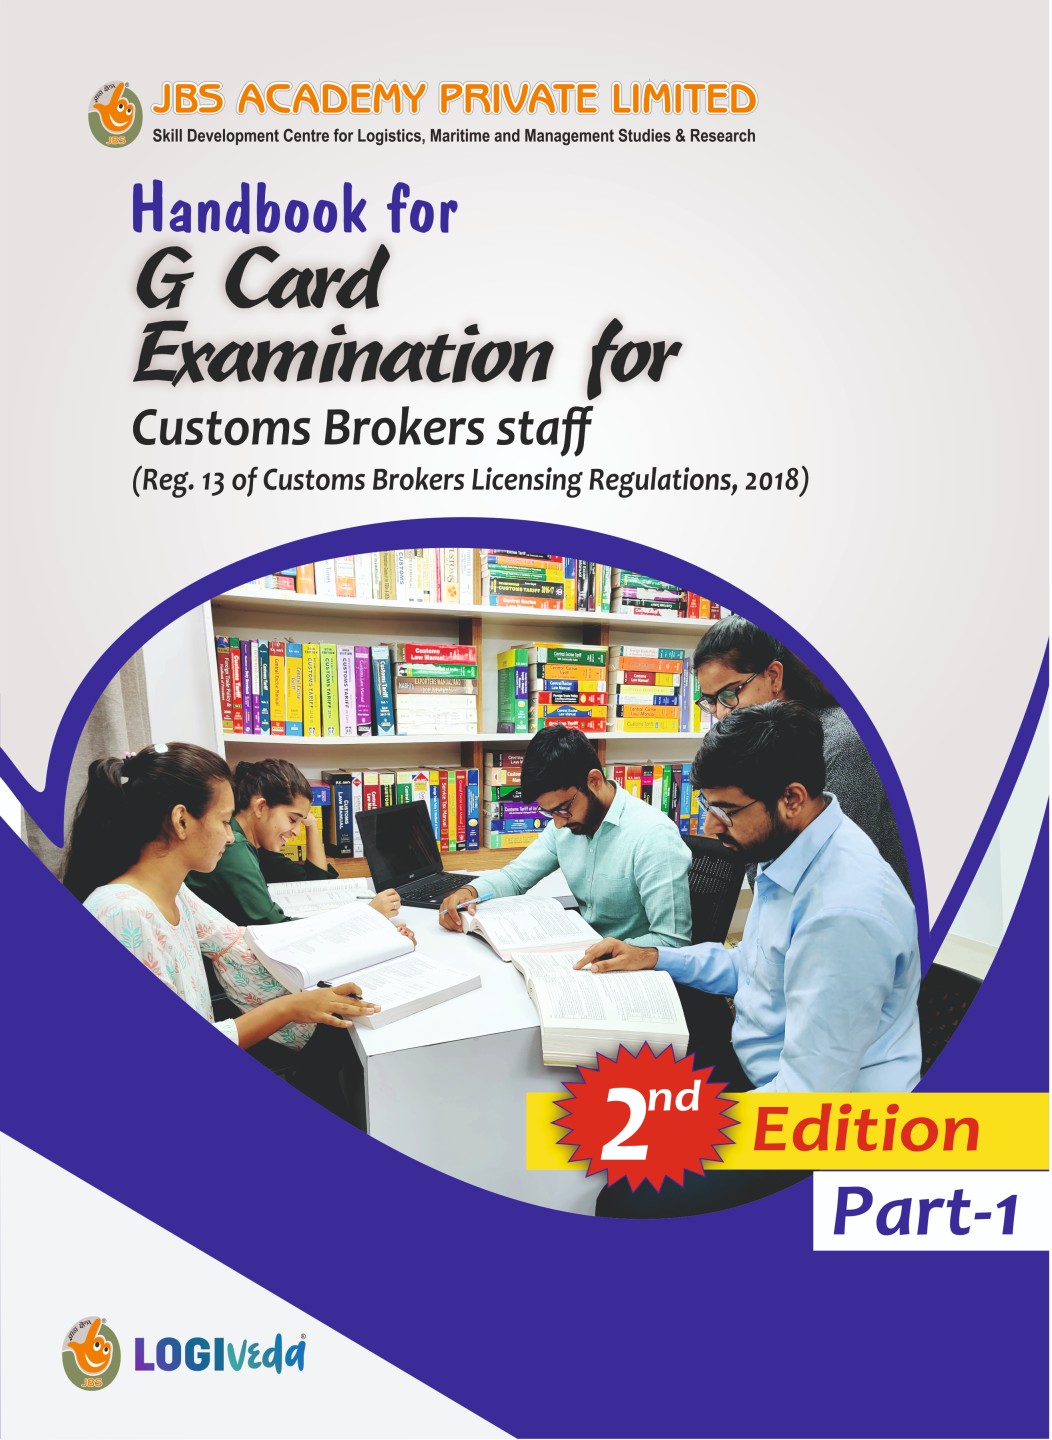 Part 1 of Handbook for G Card Examination